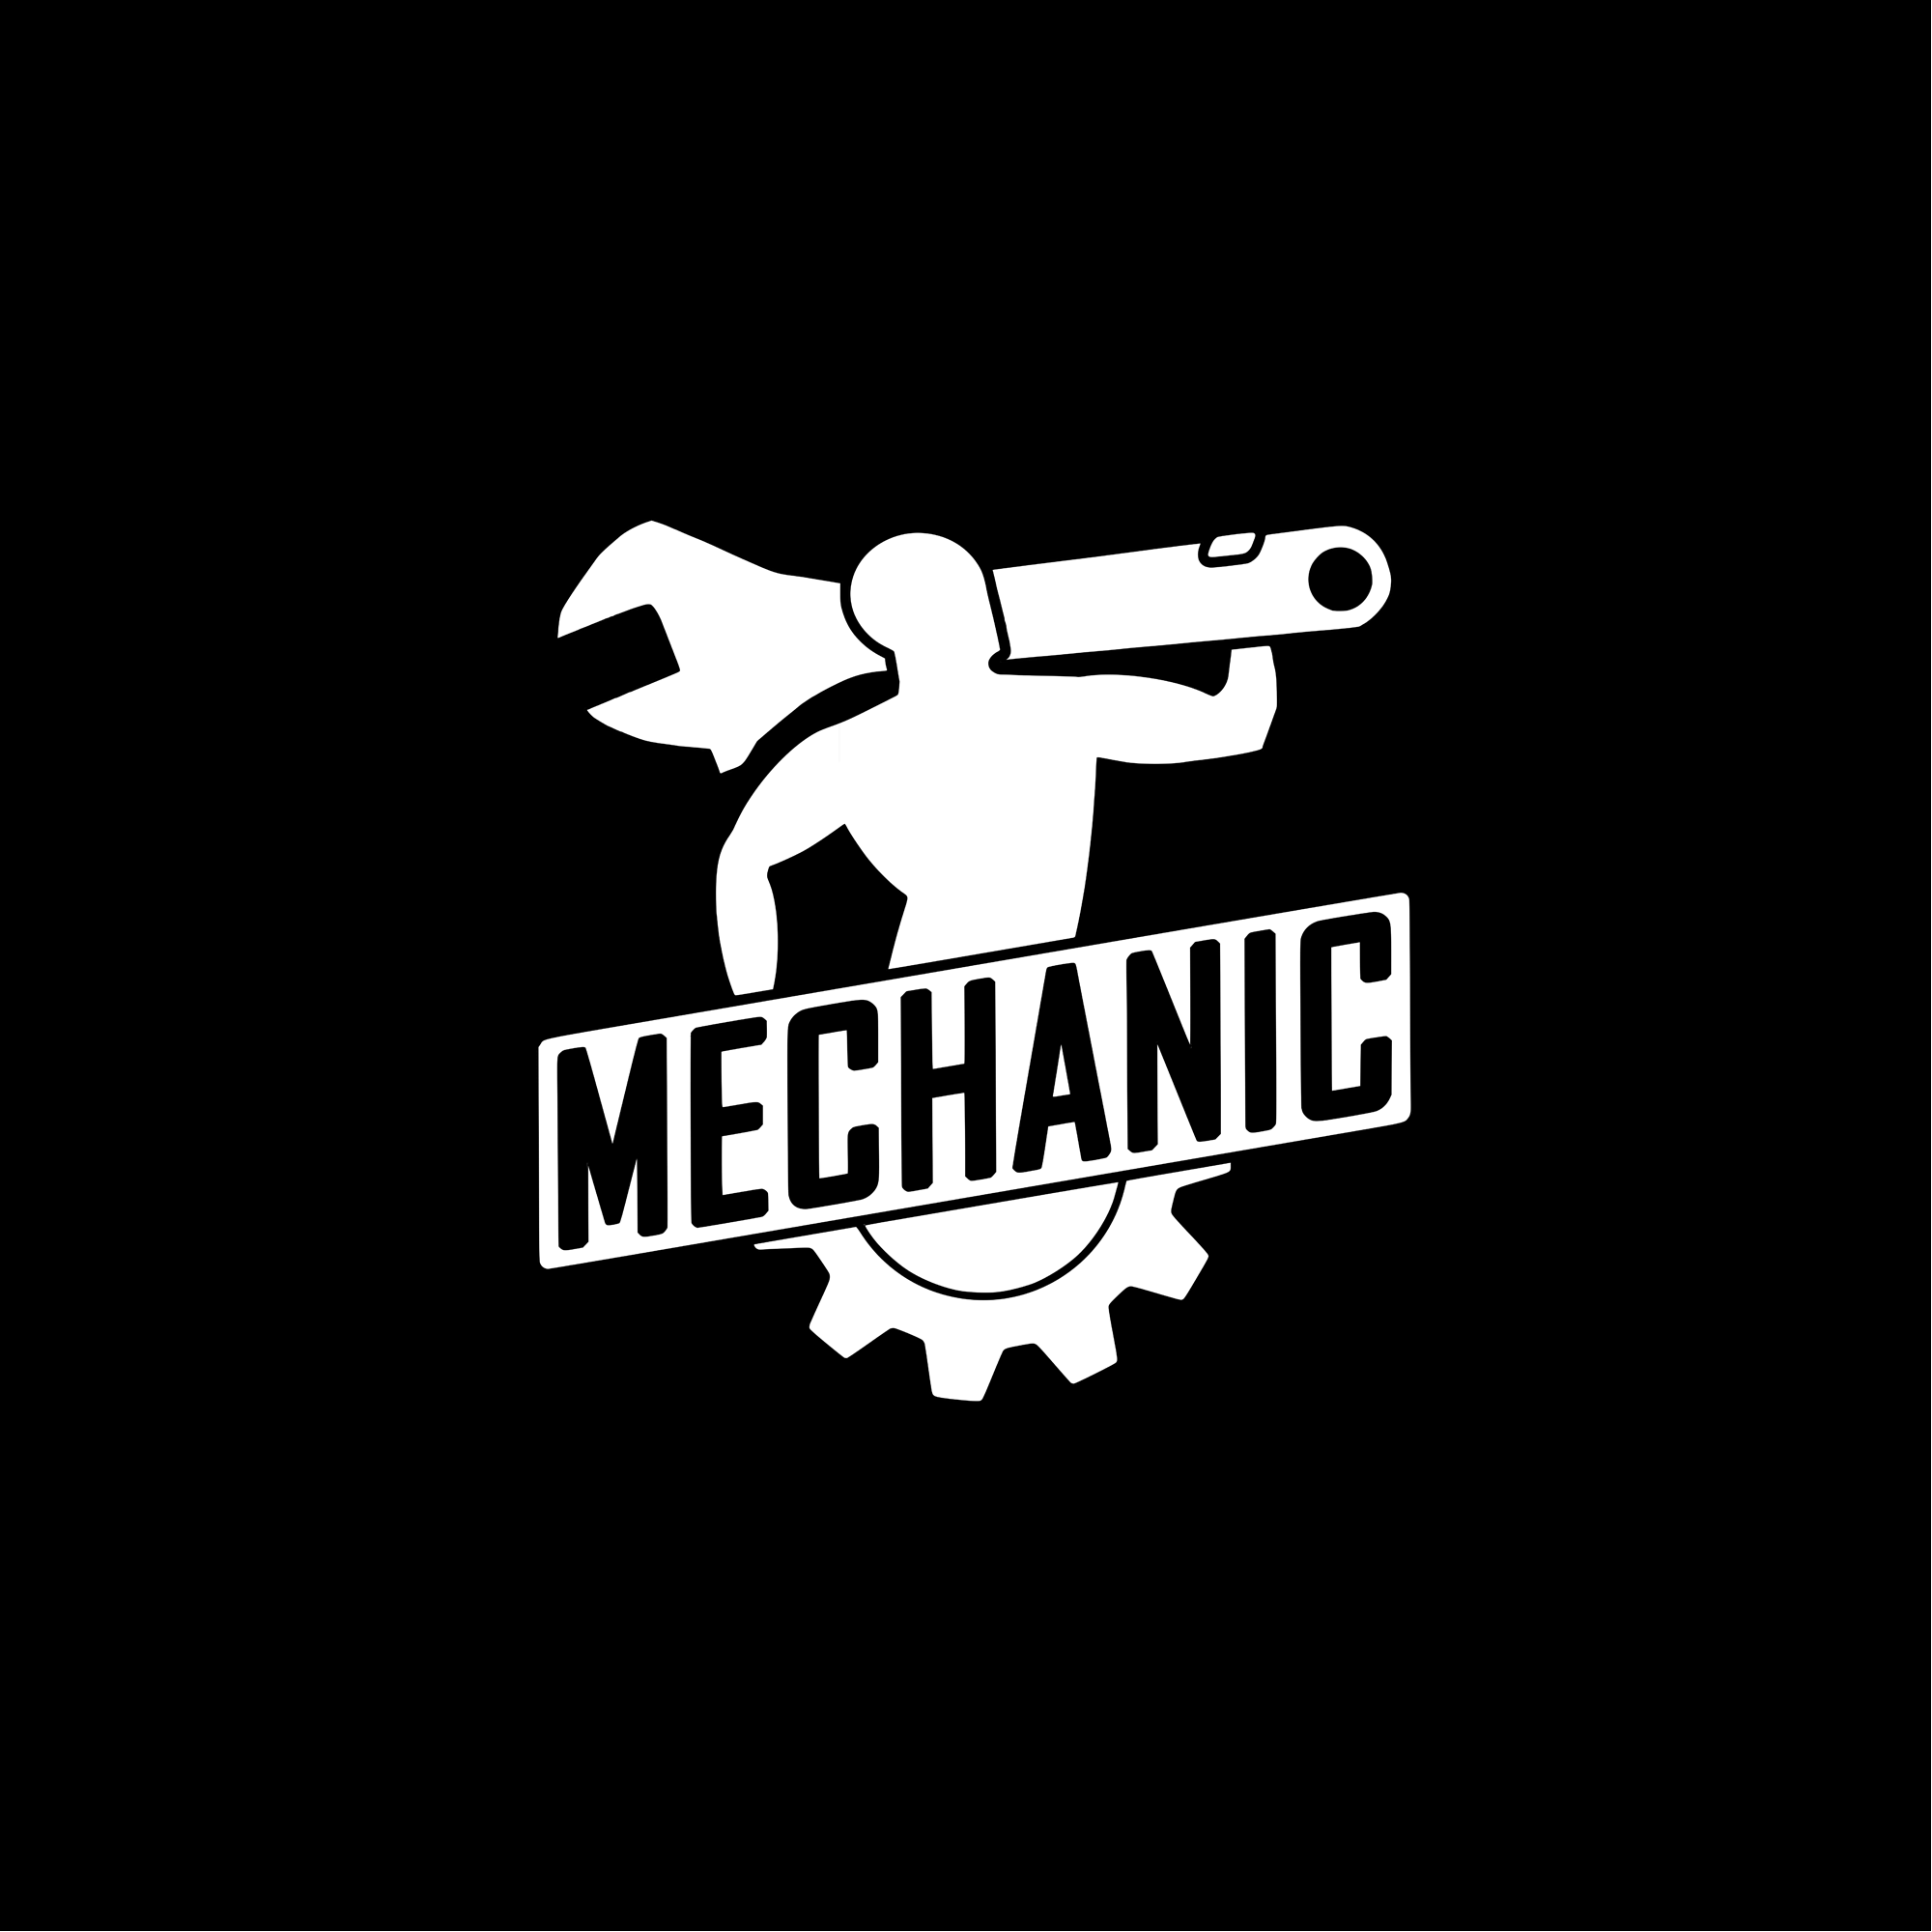 Mechanic Art Logo - Mechanic Logo Design | Vinyl Ideas | Logo design, Logos, Design